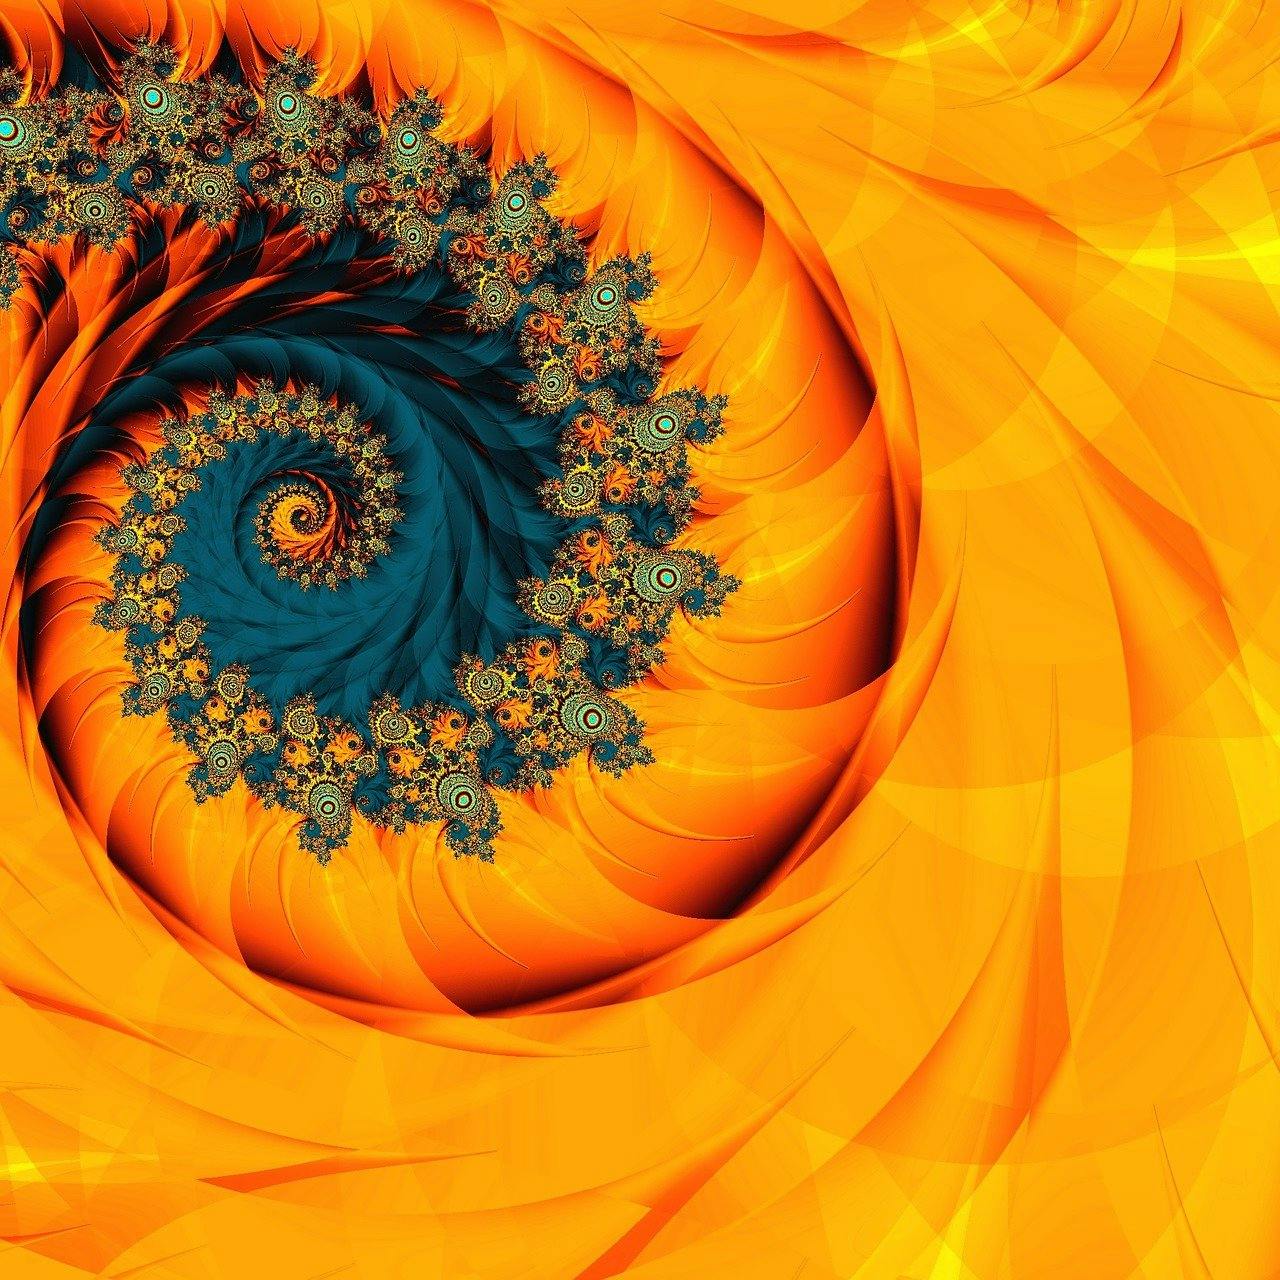 A flower resembling the Fibonacci spiral